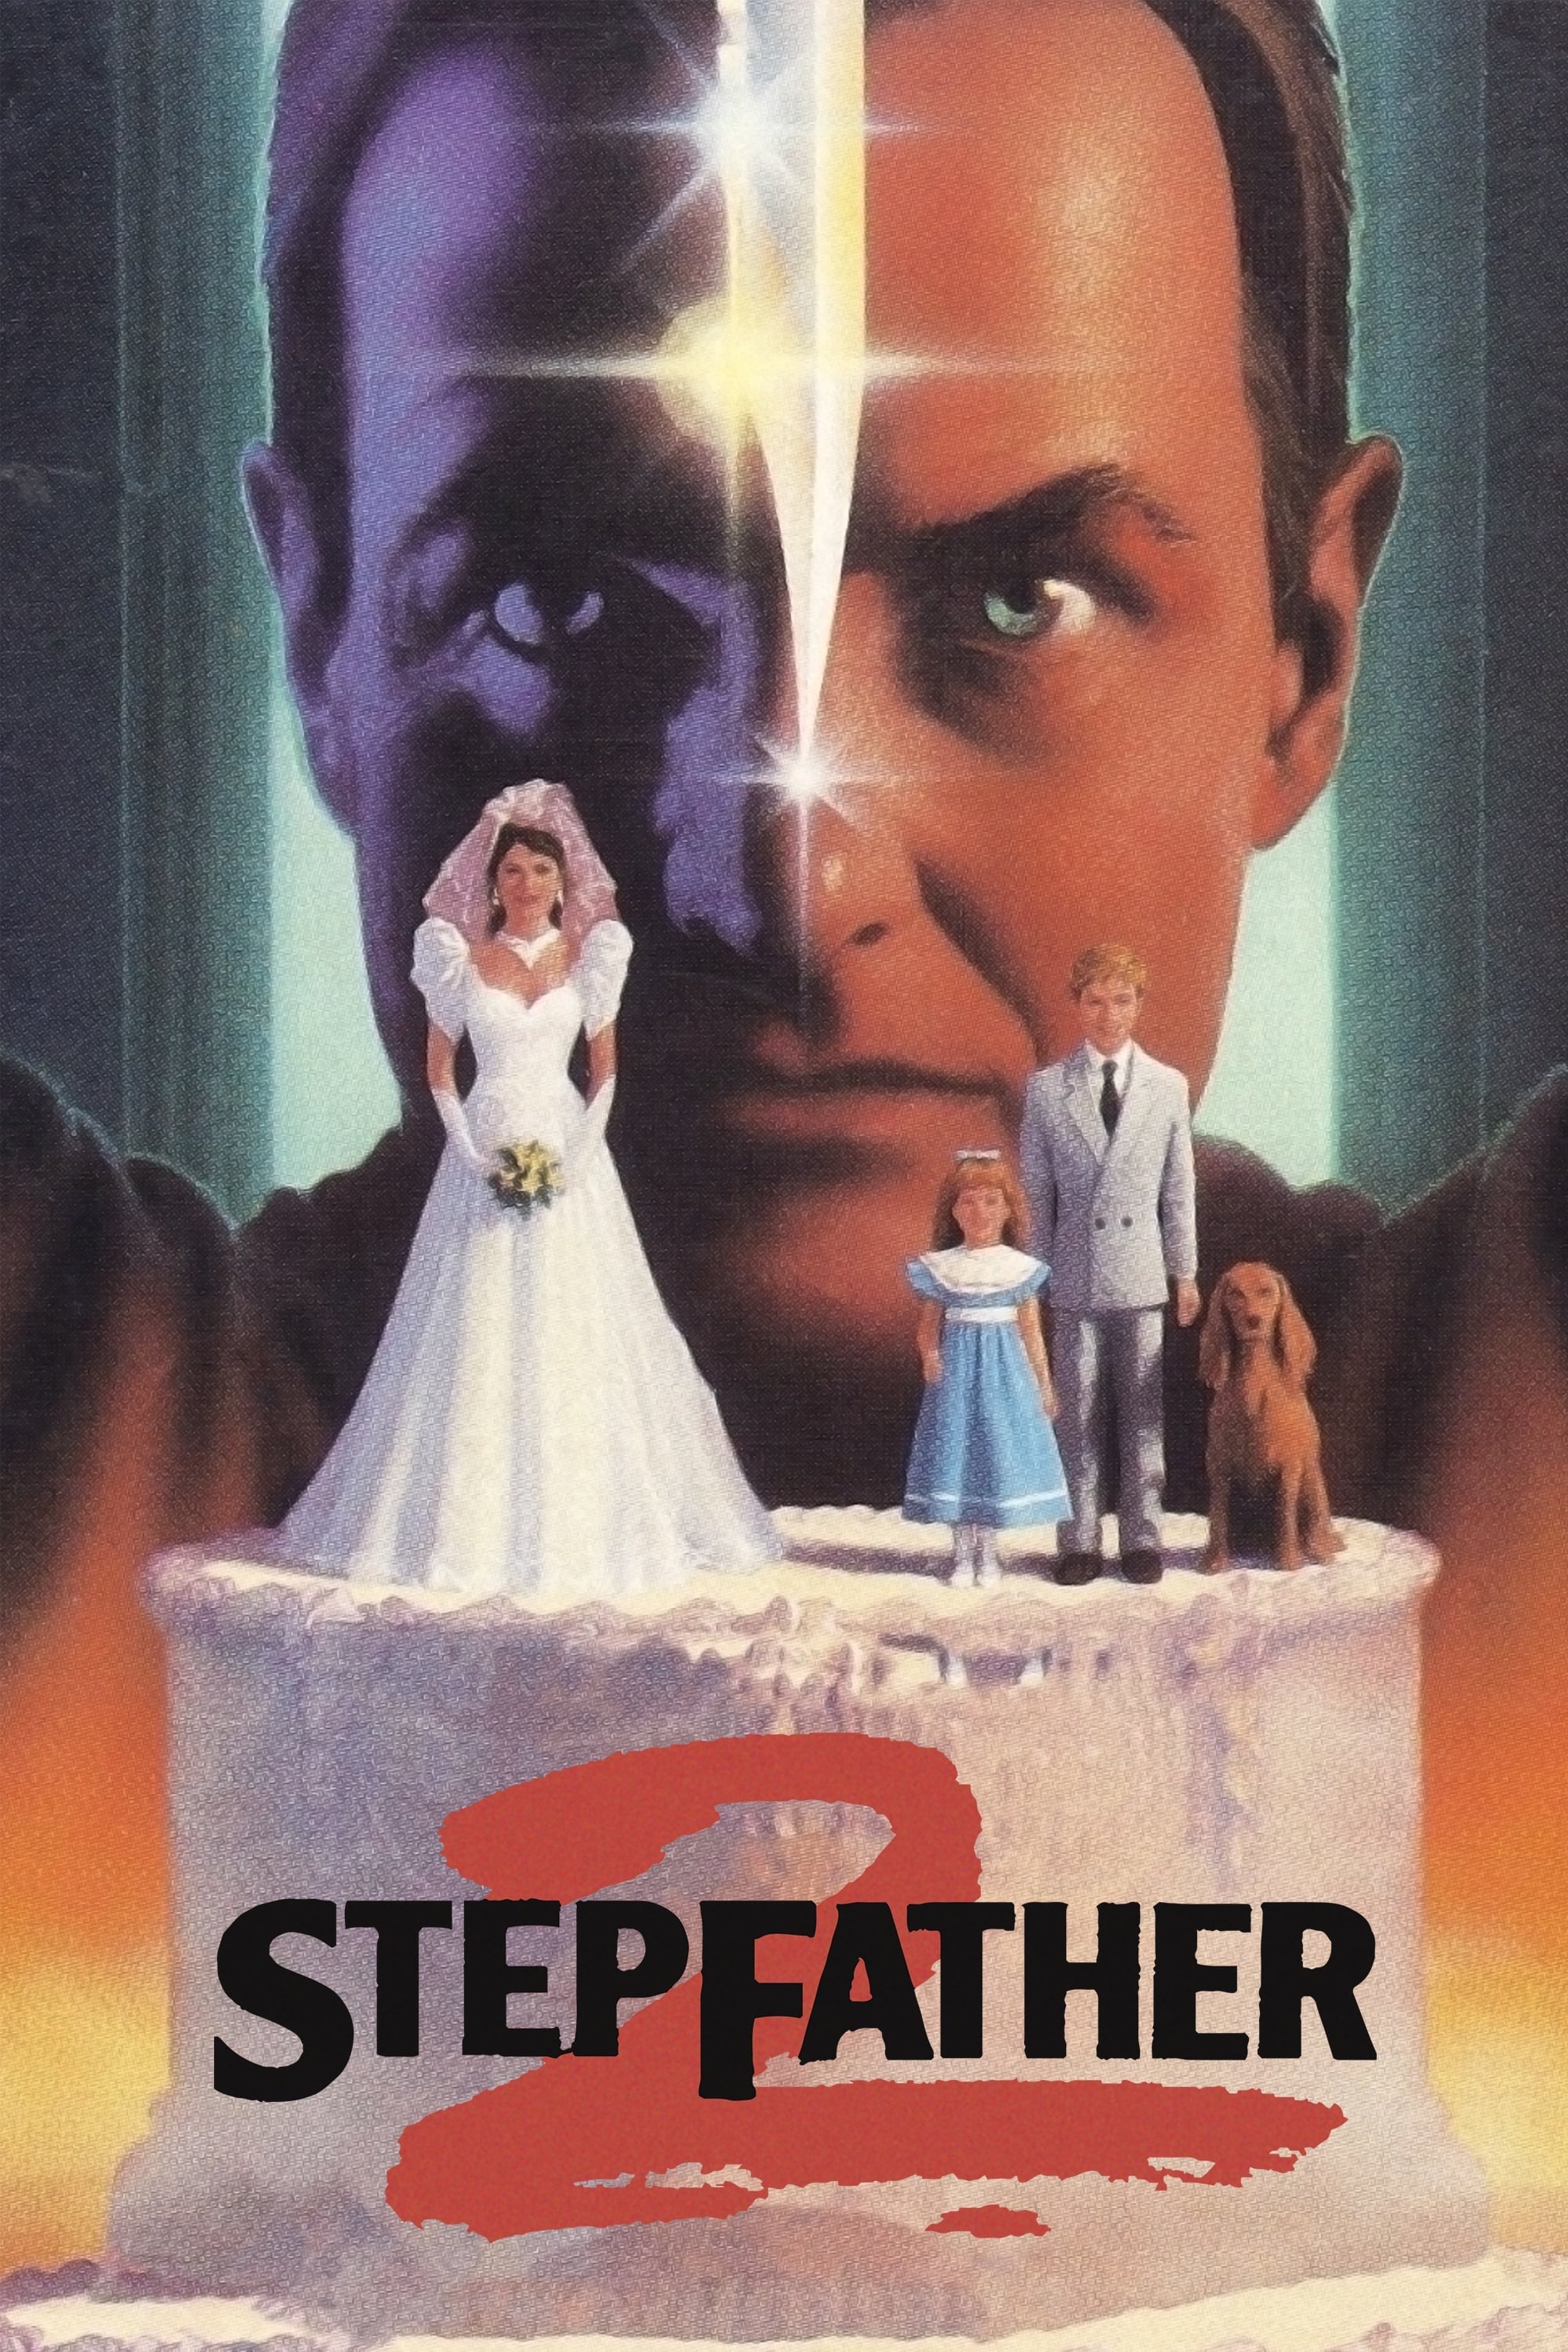 Stepfather 2 (1989)